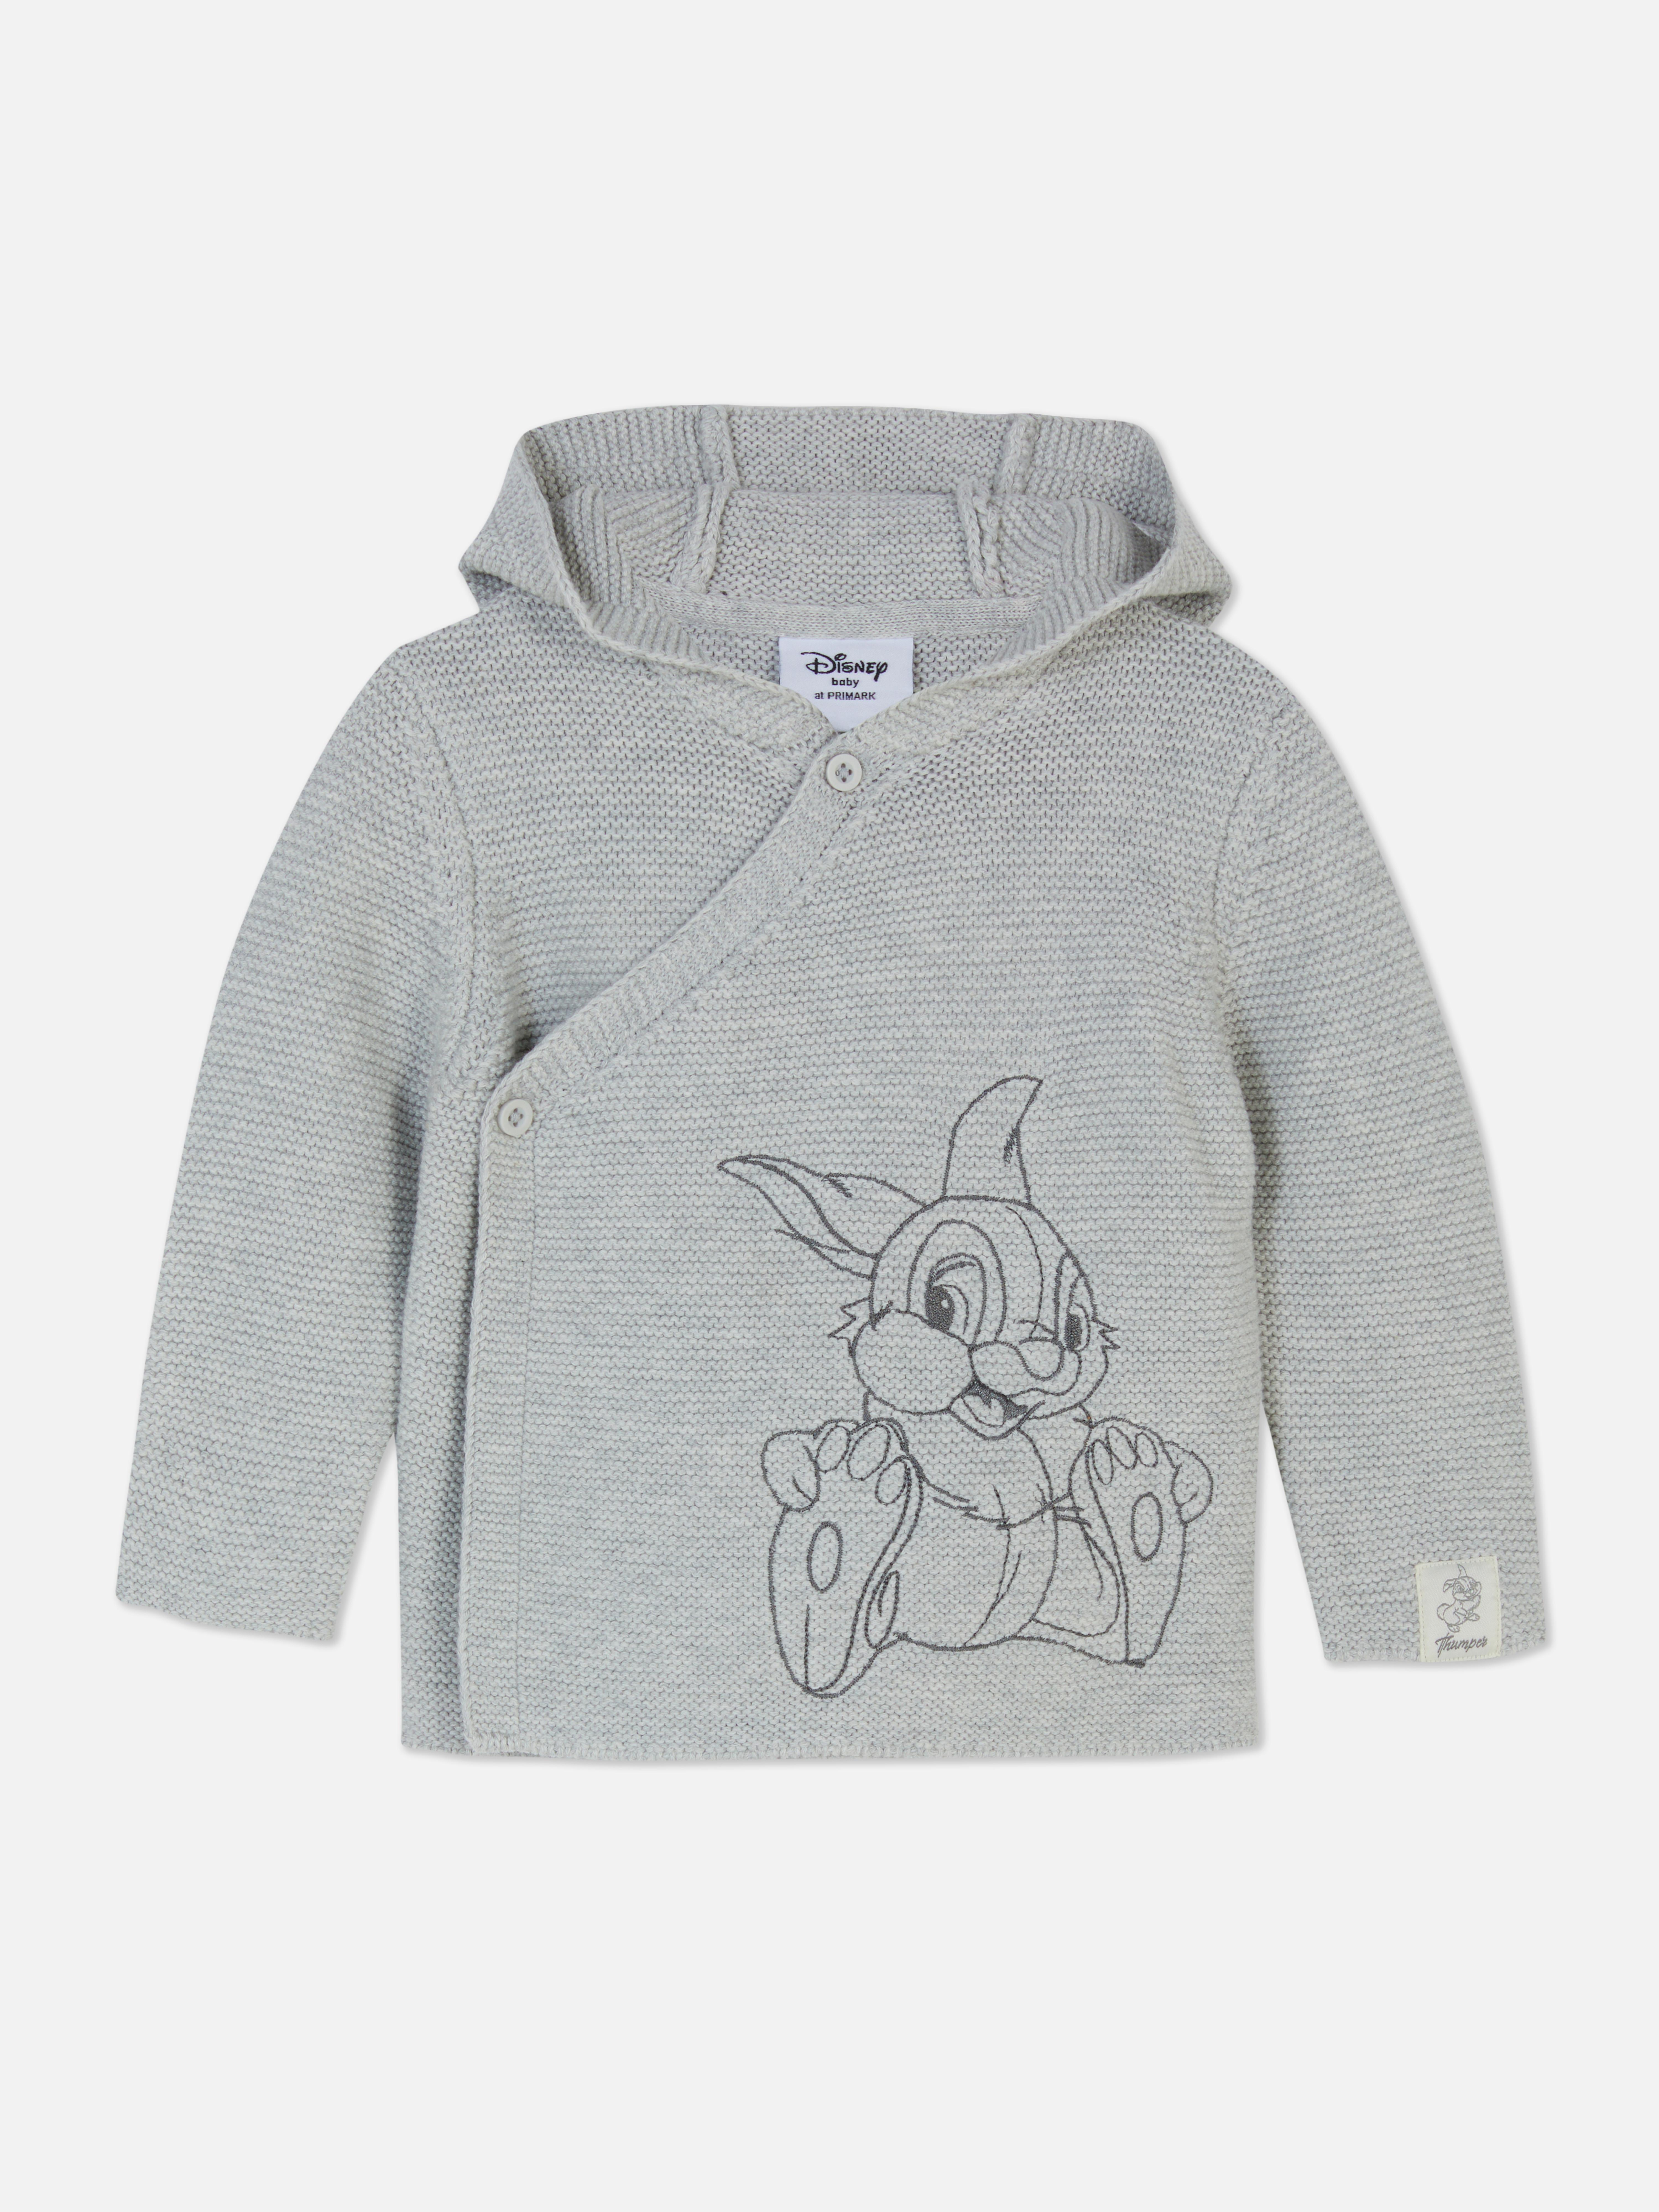 Disney’s Thumper Hooded Cardigan